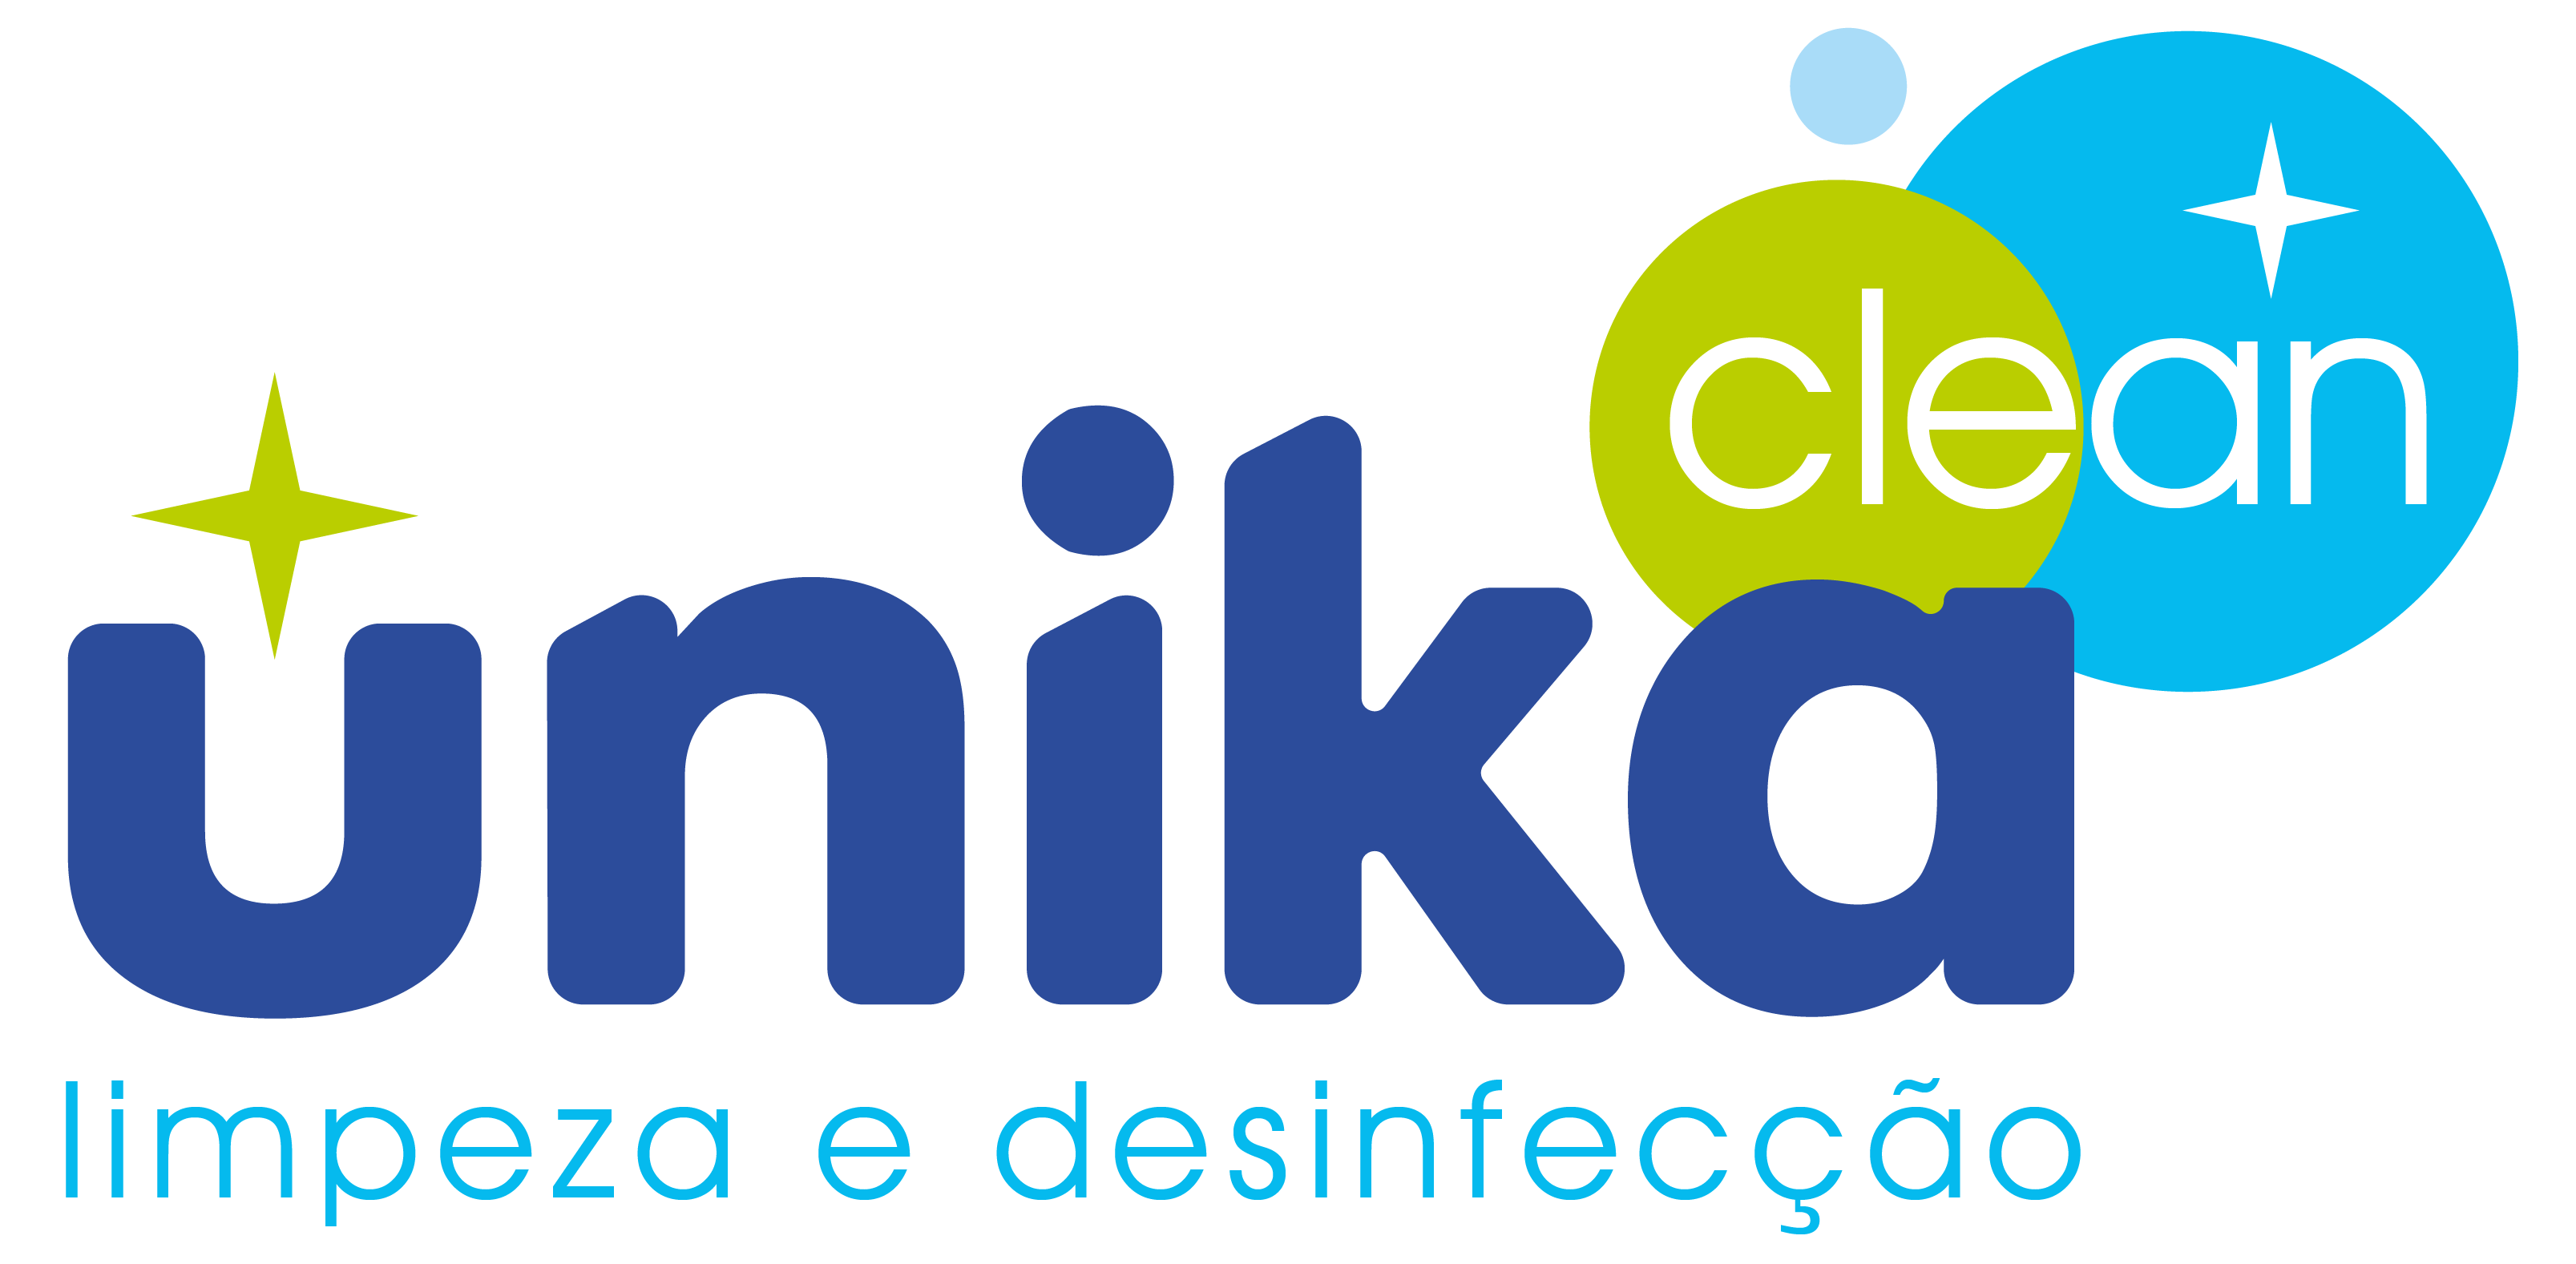 empresa de limpeza a seco colchão - Unika Clean